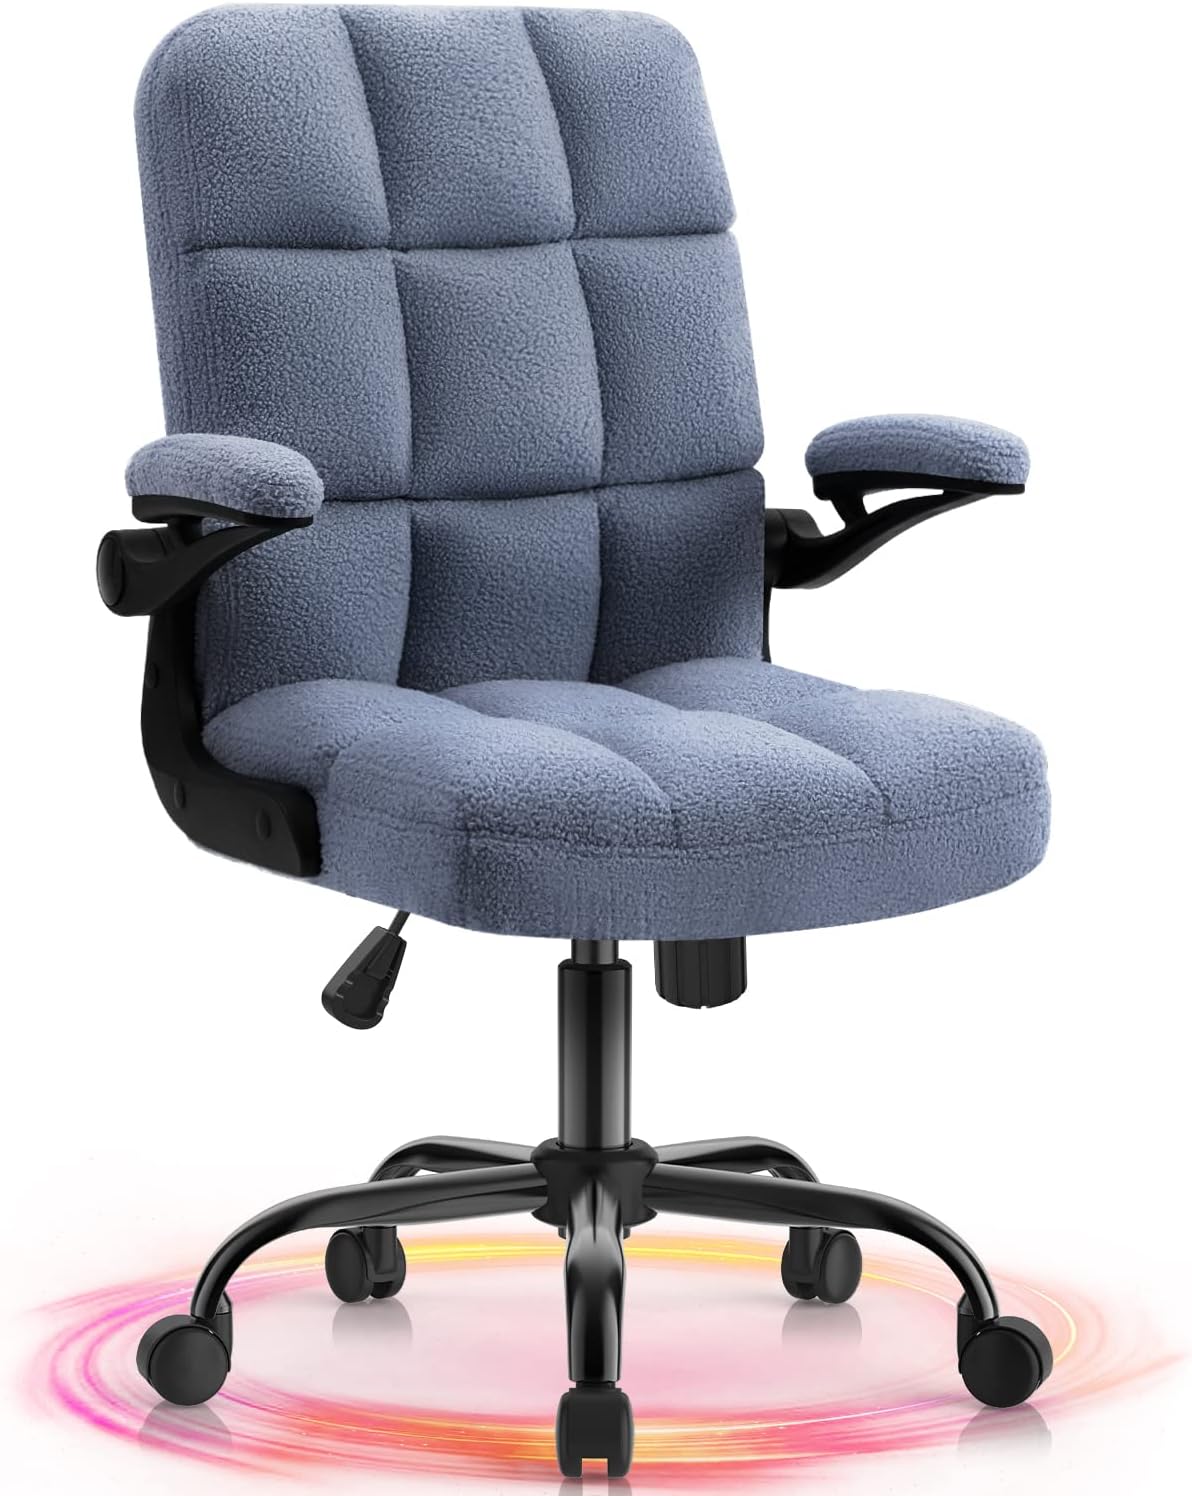 Silla ejecutiva de escritorio de oficina con respaldo alto, silla